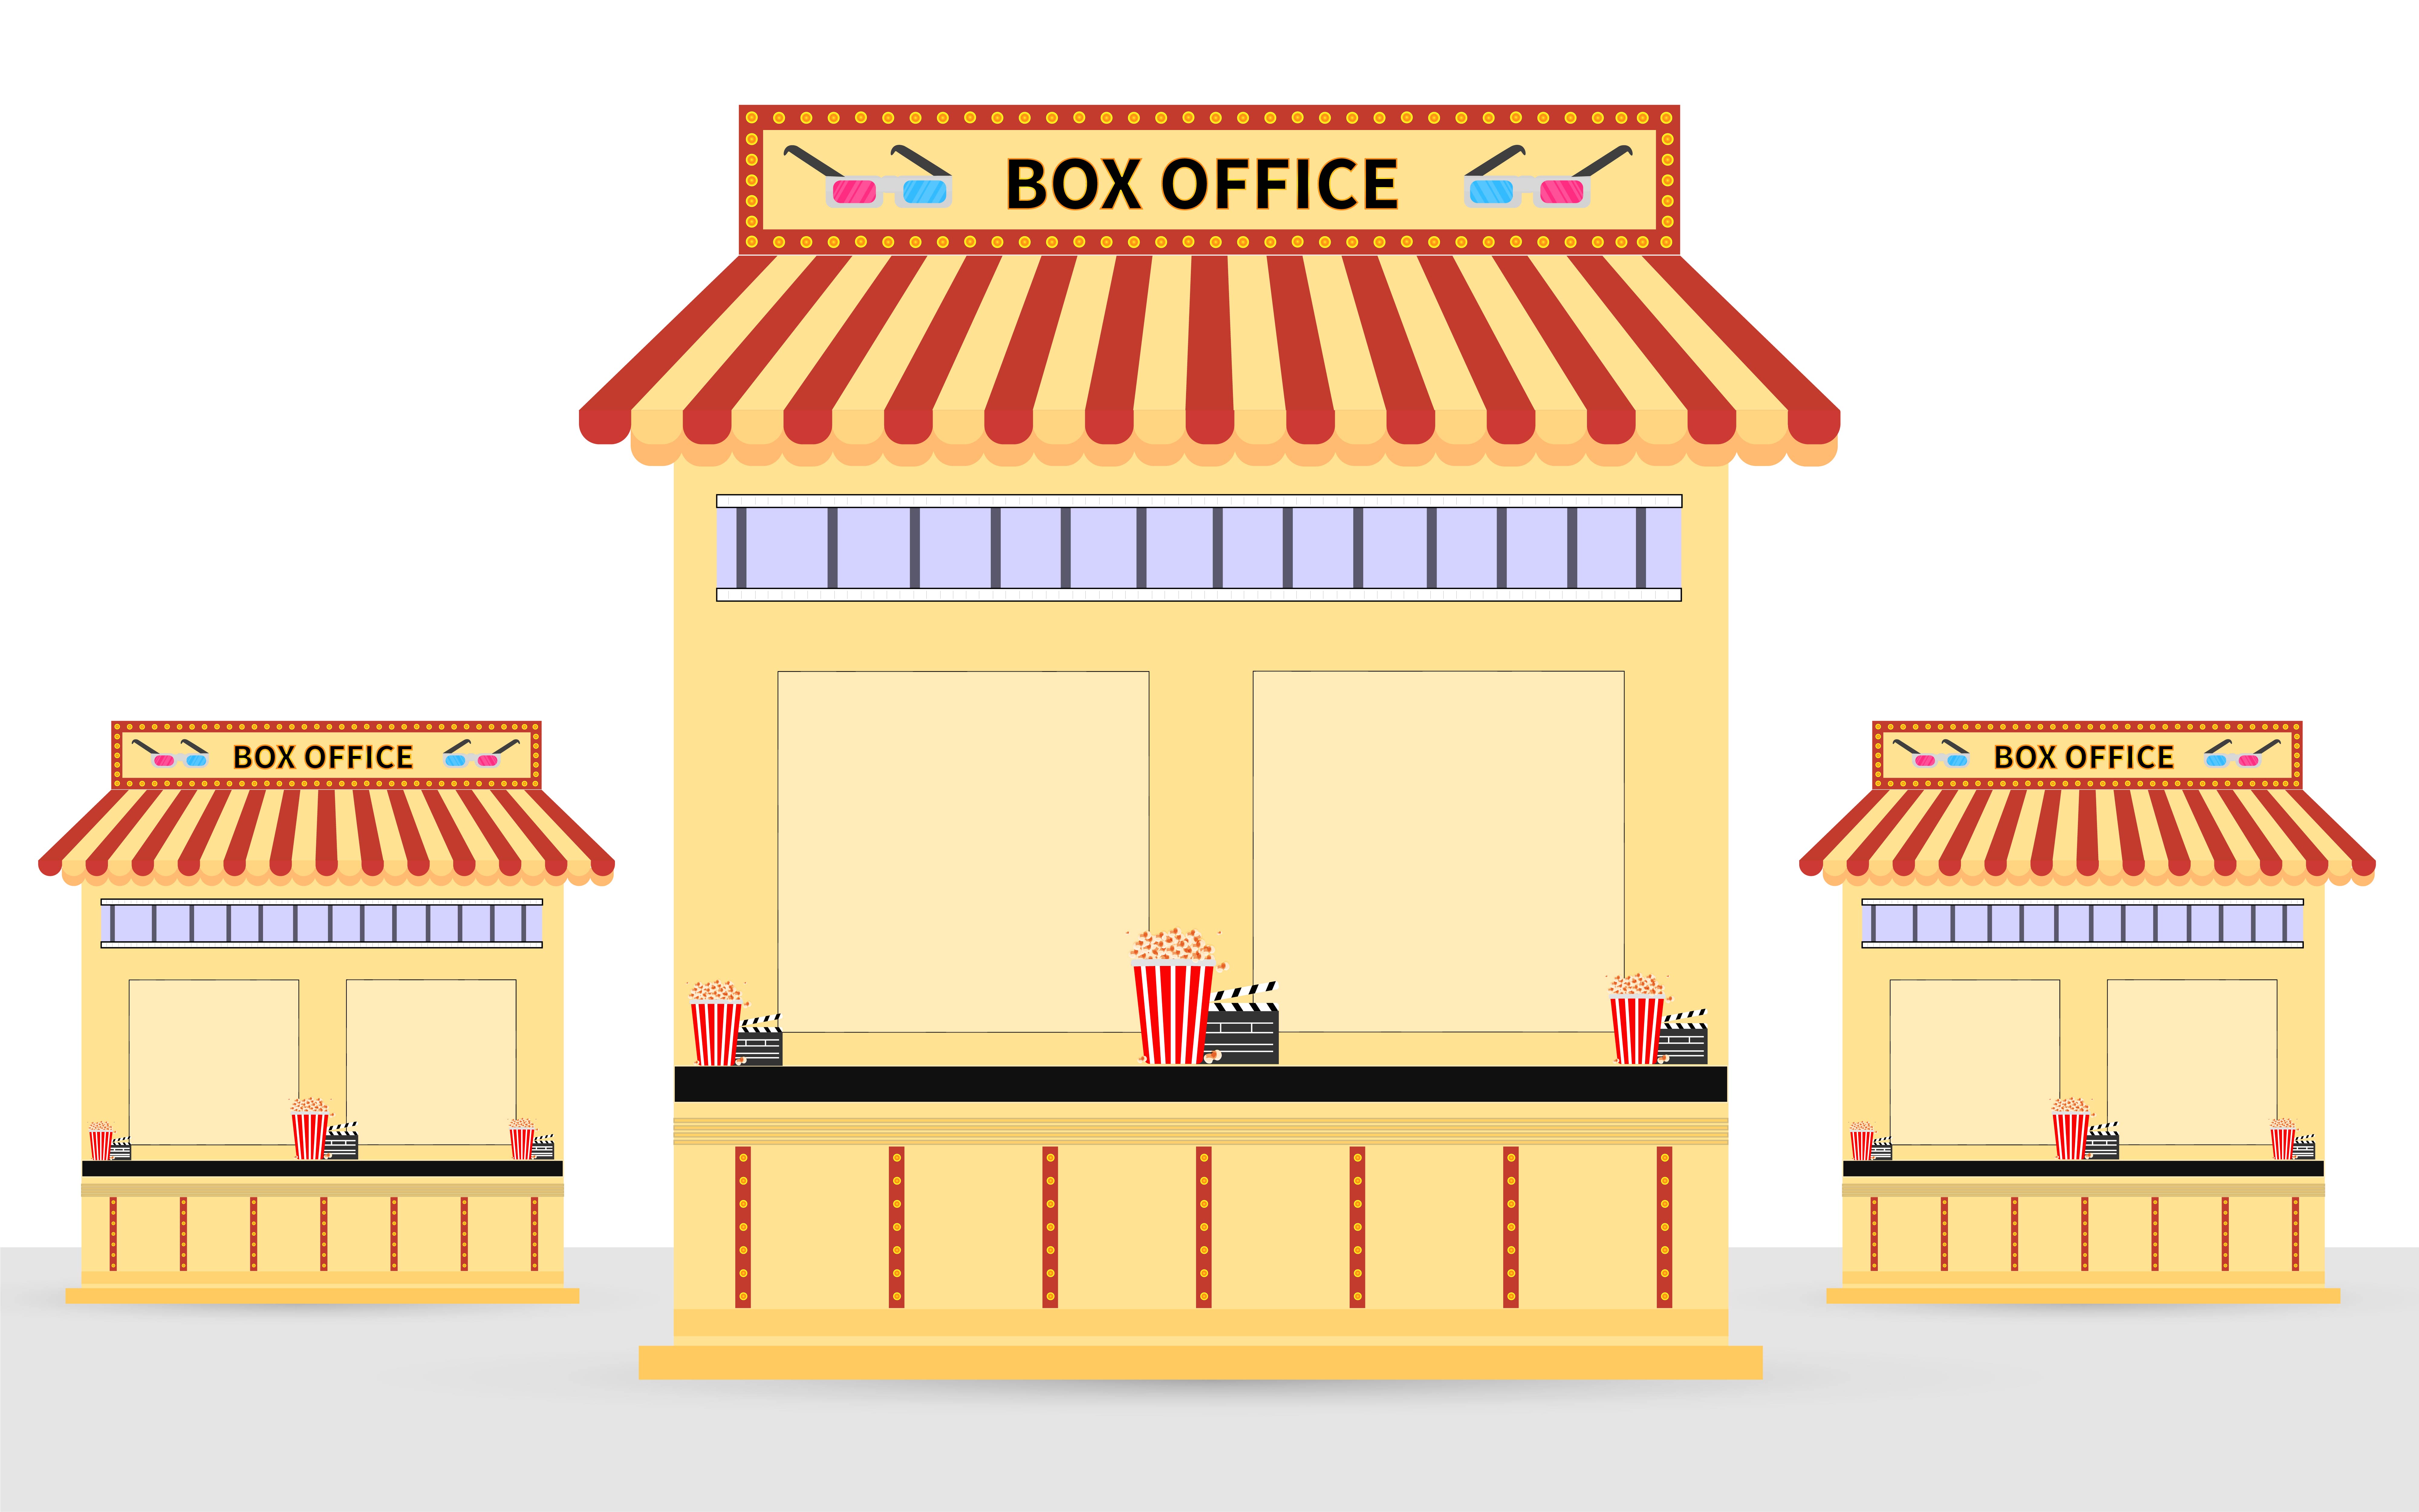 Ticket box office illustration with cinema items -popcorn, soda, ,clapper, movie film strips.